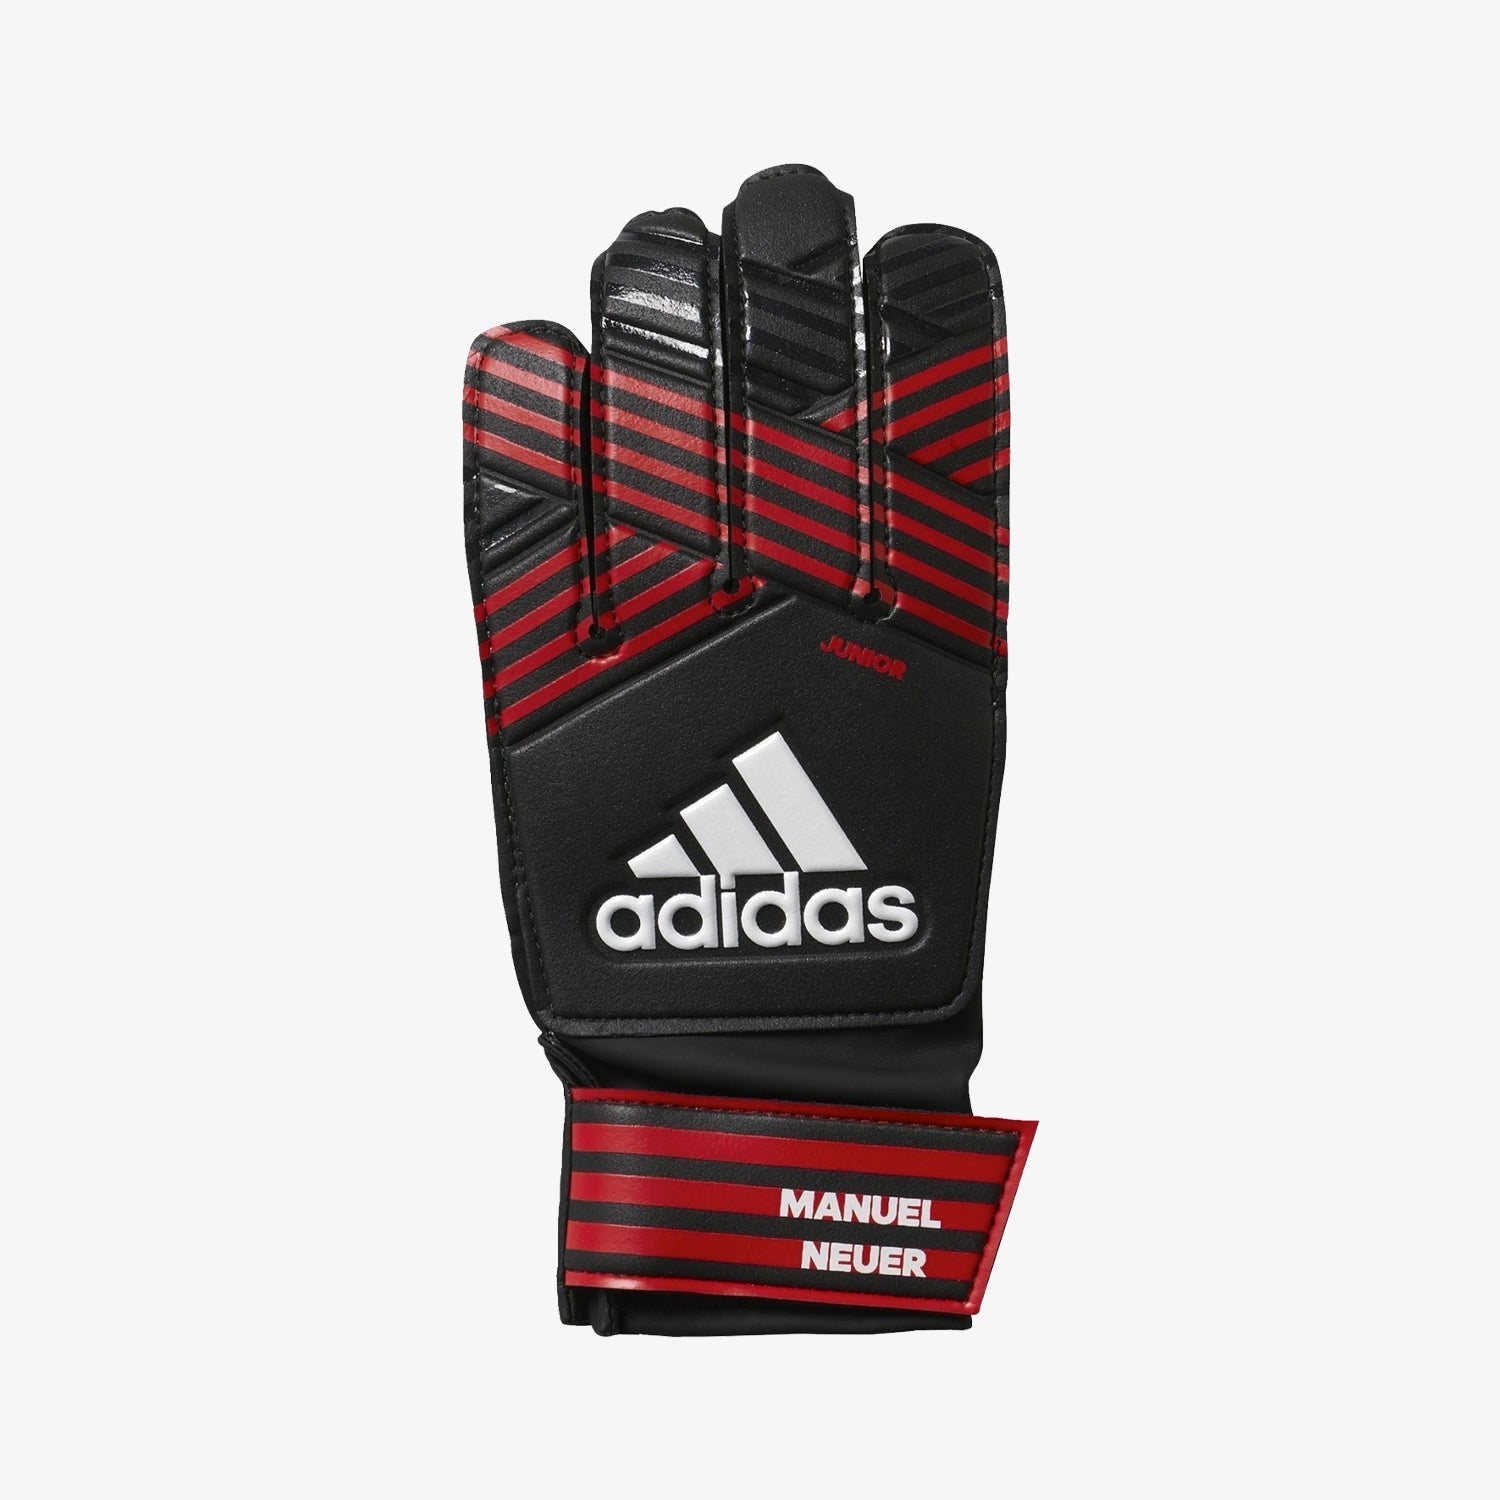 orificio de soplado Mortal paleta Kids Unisex Ace Junior Manuel Neuer Soccer Gloves